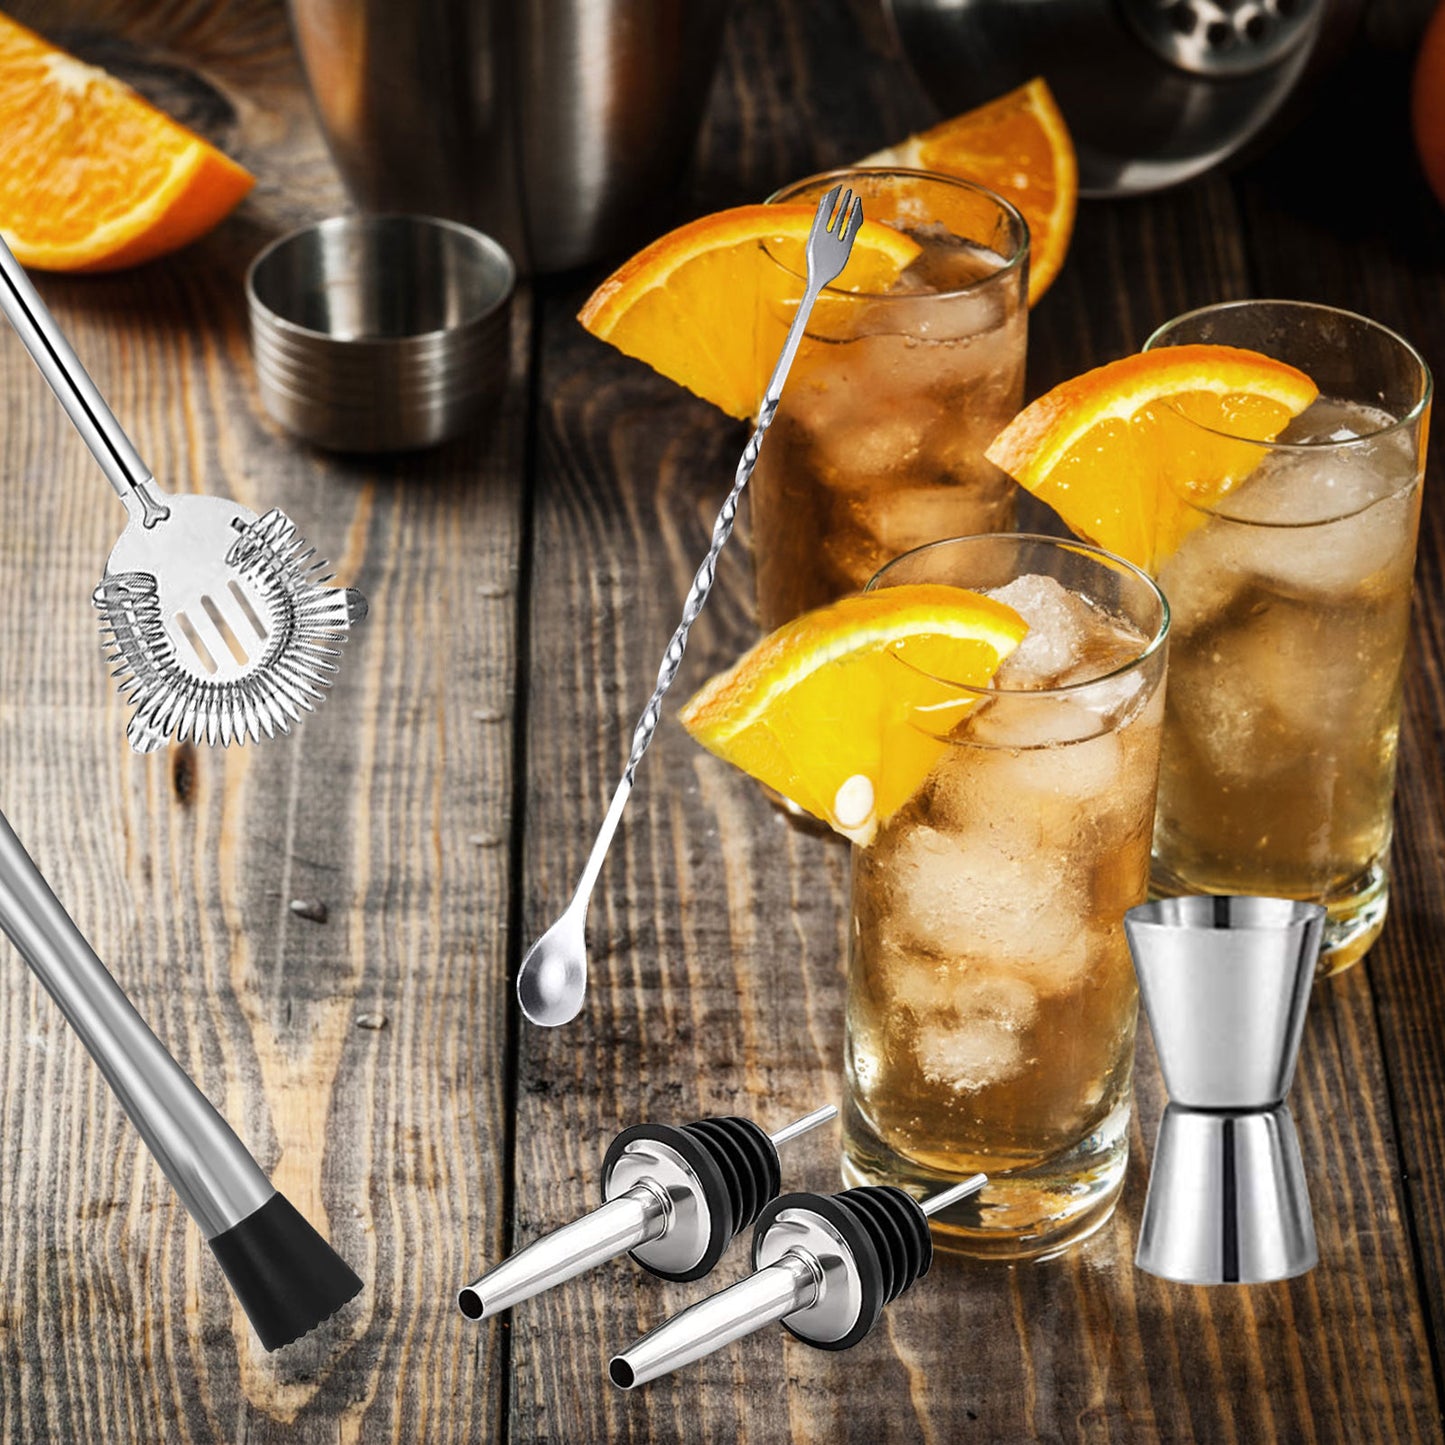 Cocktail Shaker Kit